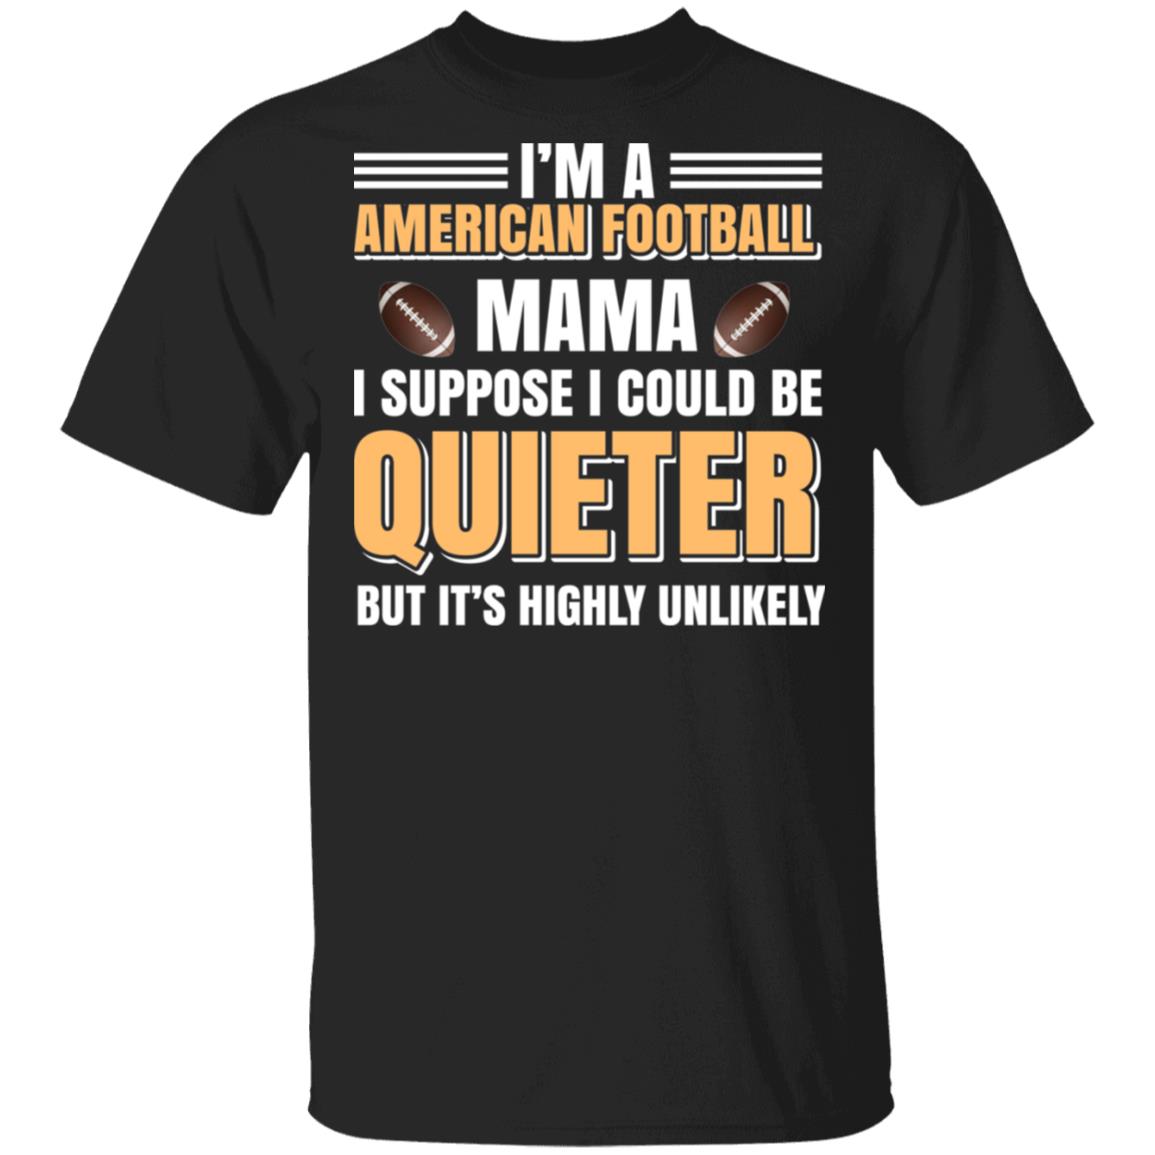 American Football Mama Funny Shirt I suppose I Could Be Quieter Shirt